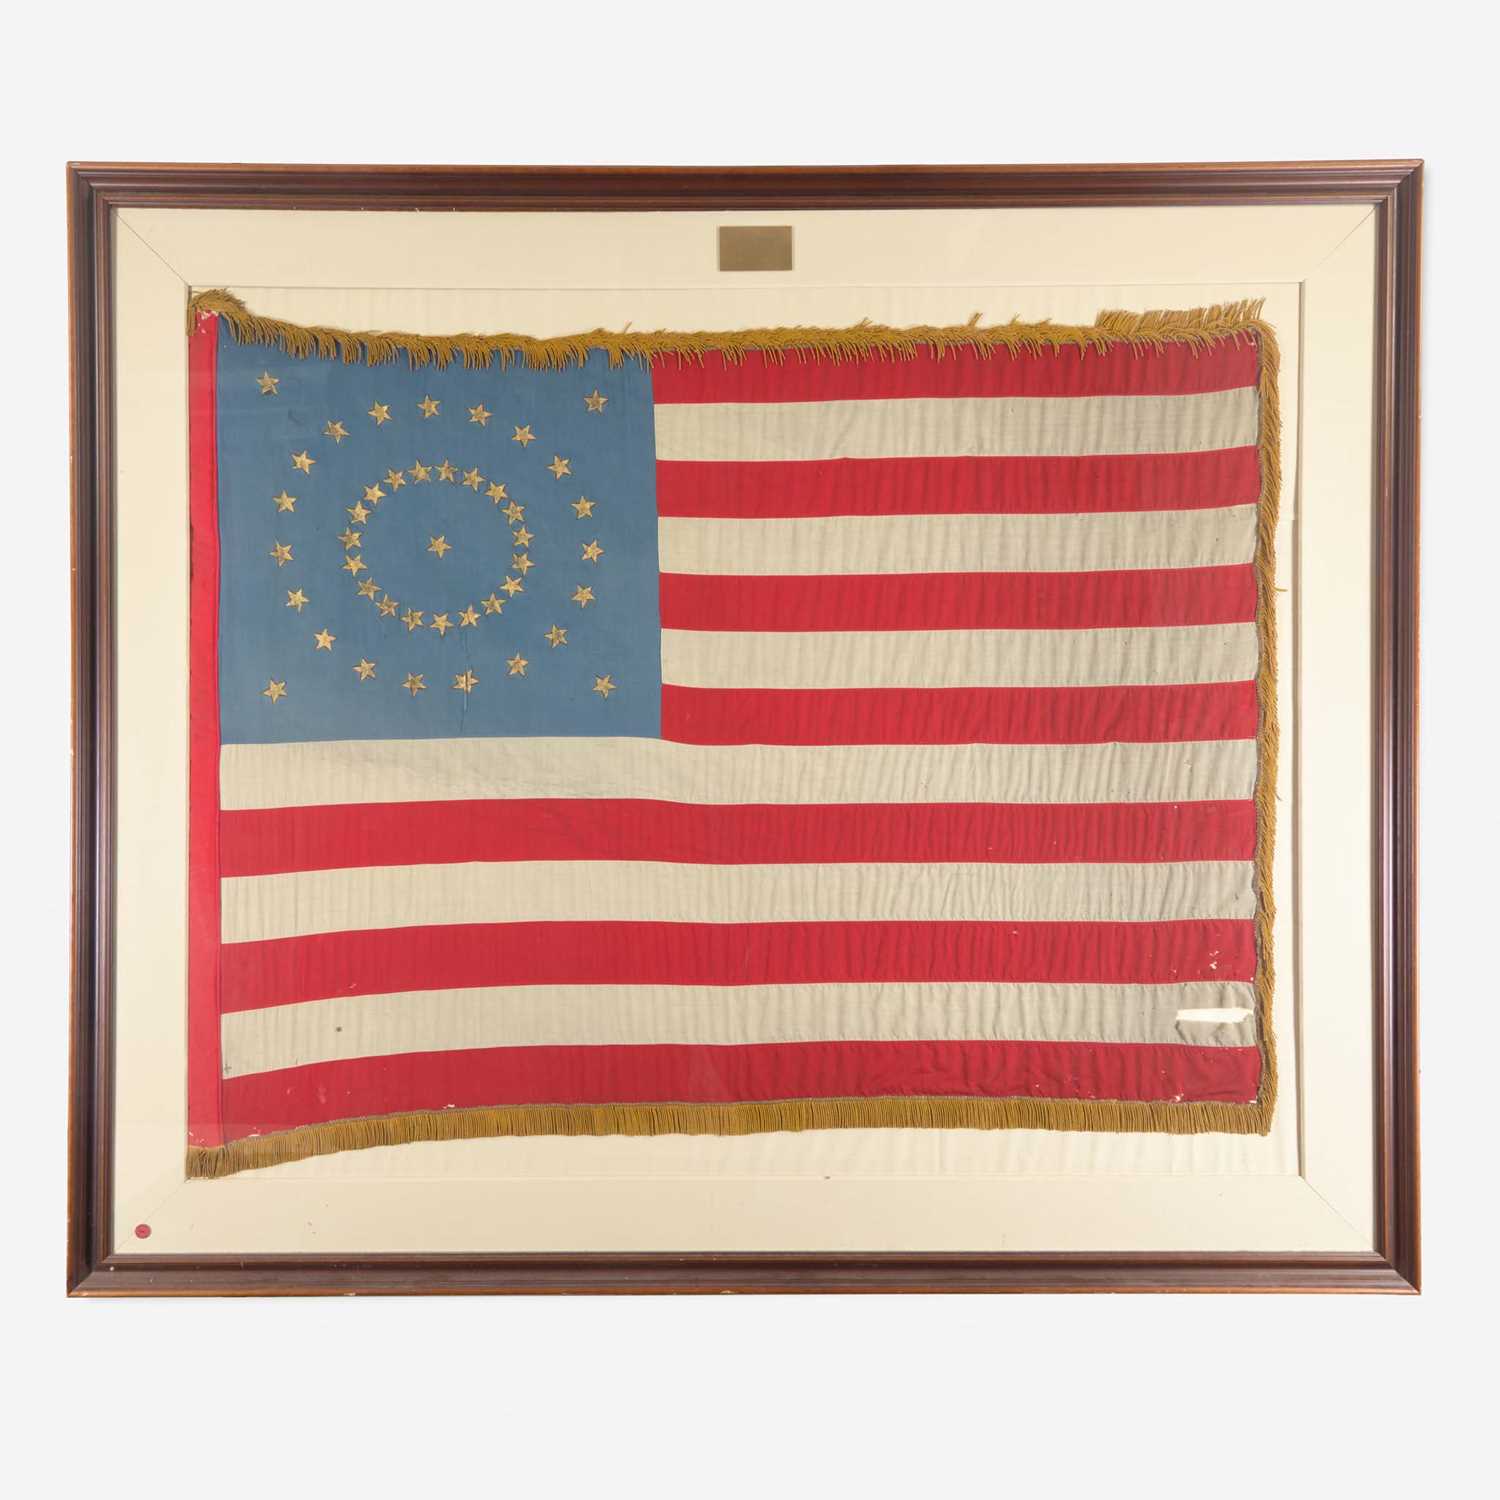 Lot 34 - A 43-Star American Ceremonial Flag commemorating Idaho statehood